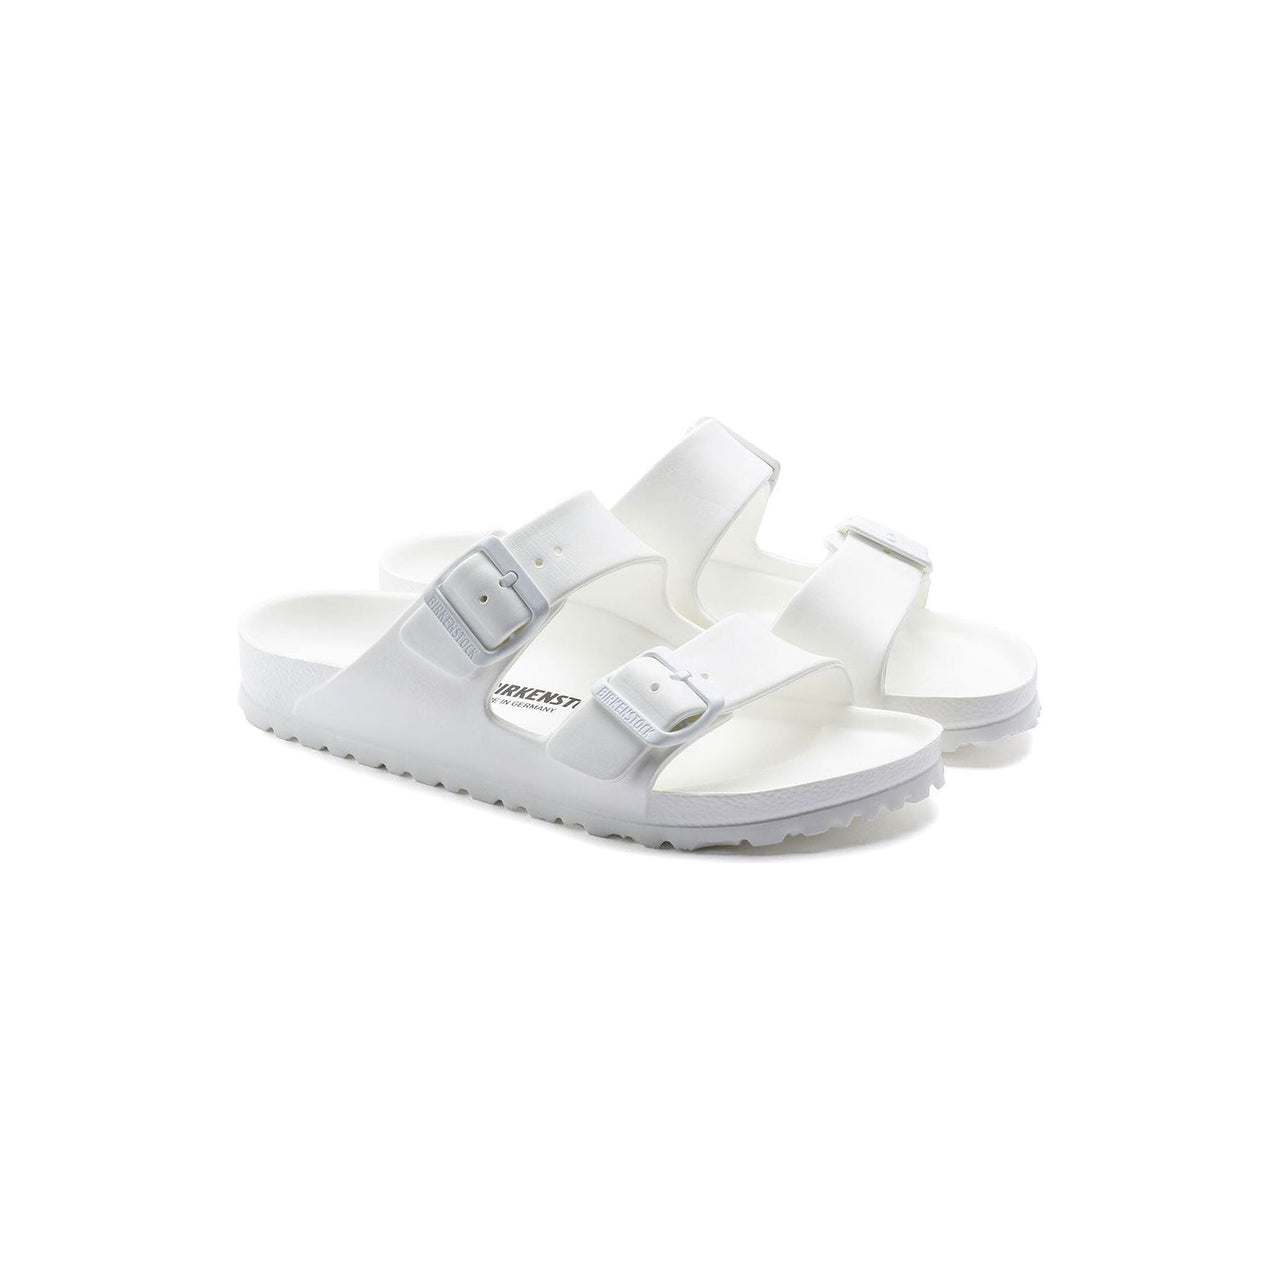 (0129443) Arizona Eva Sandals White in size 7, front view on white background